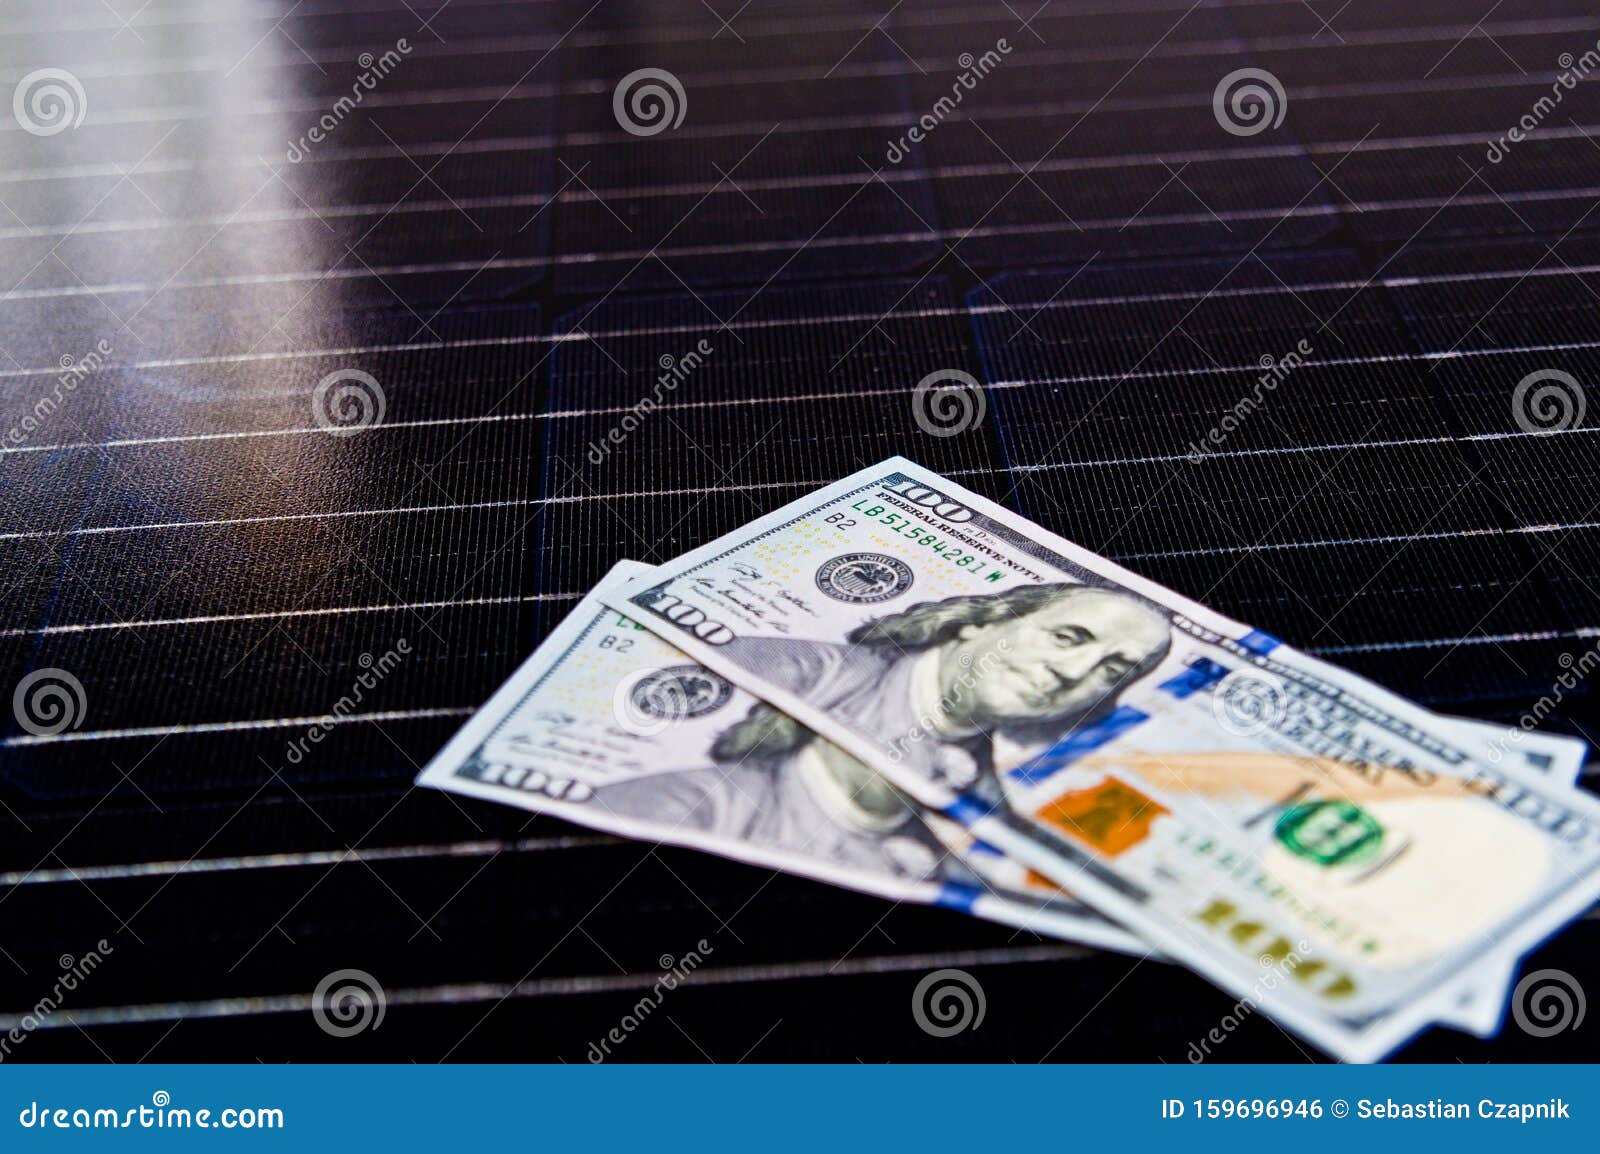 american money on solar panel surface. renewable energy cost